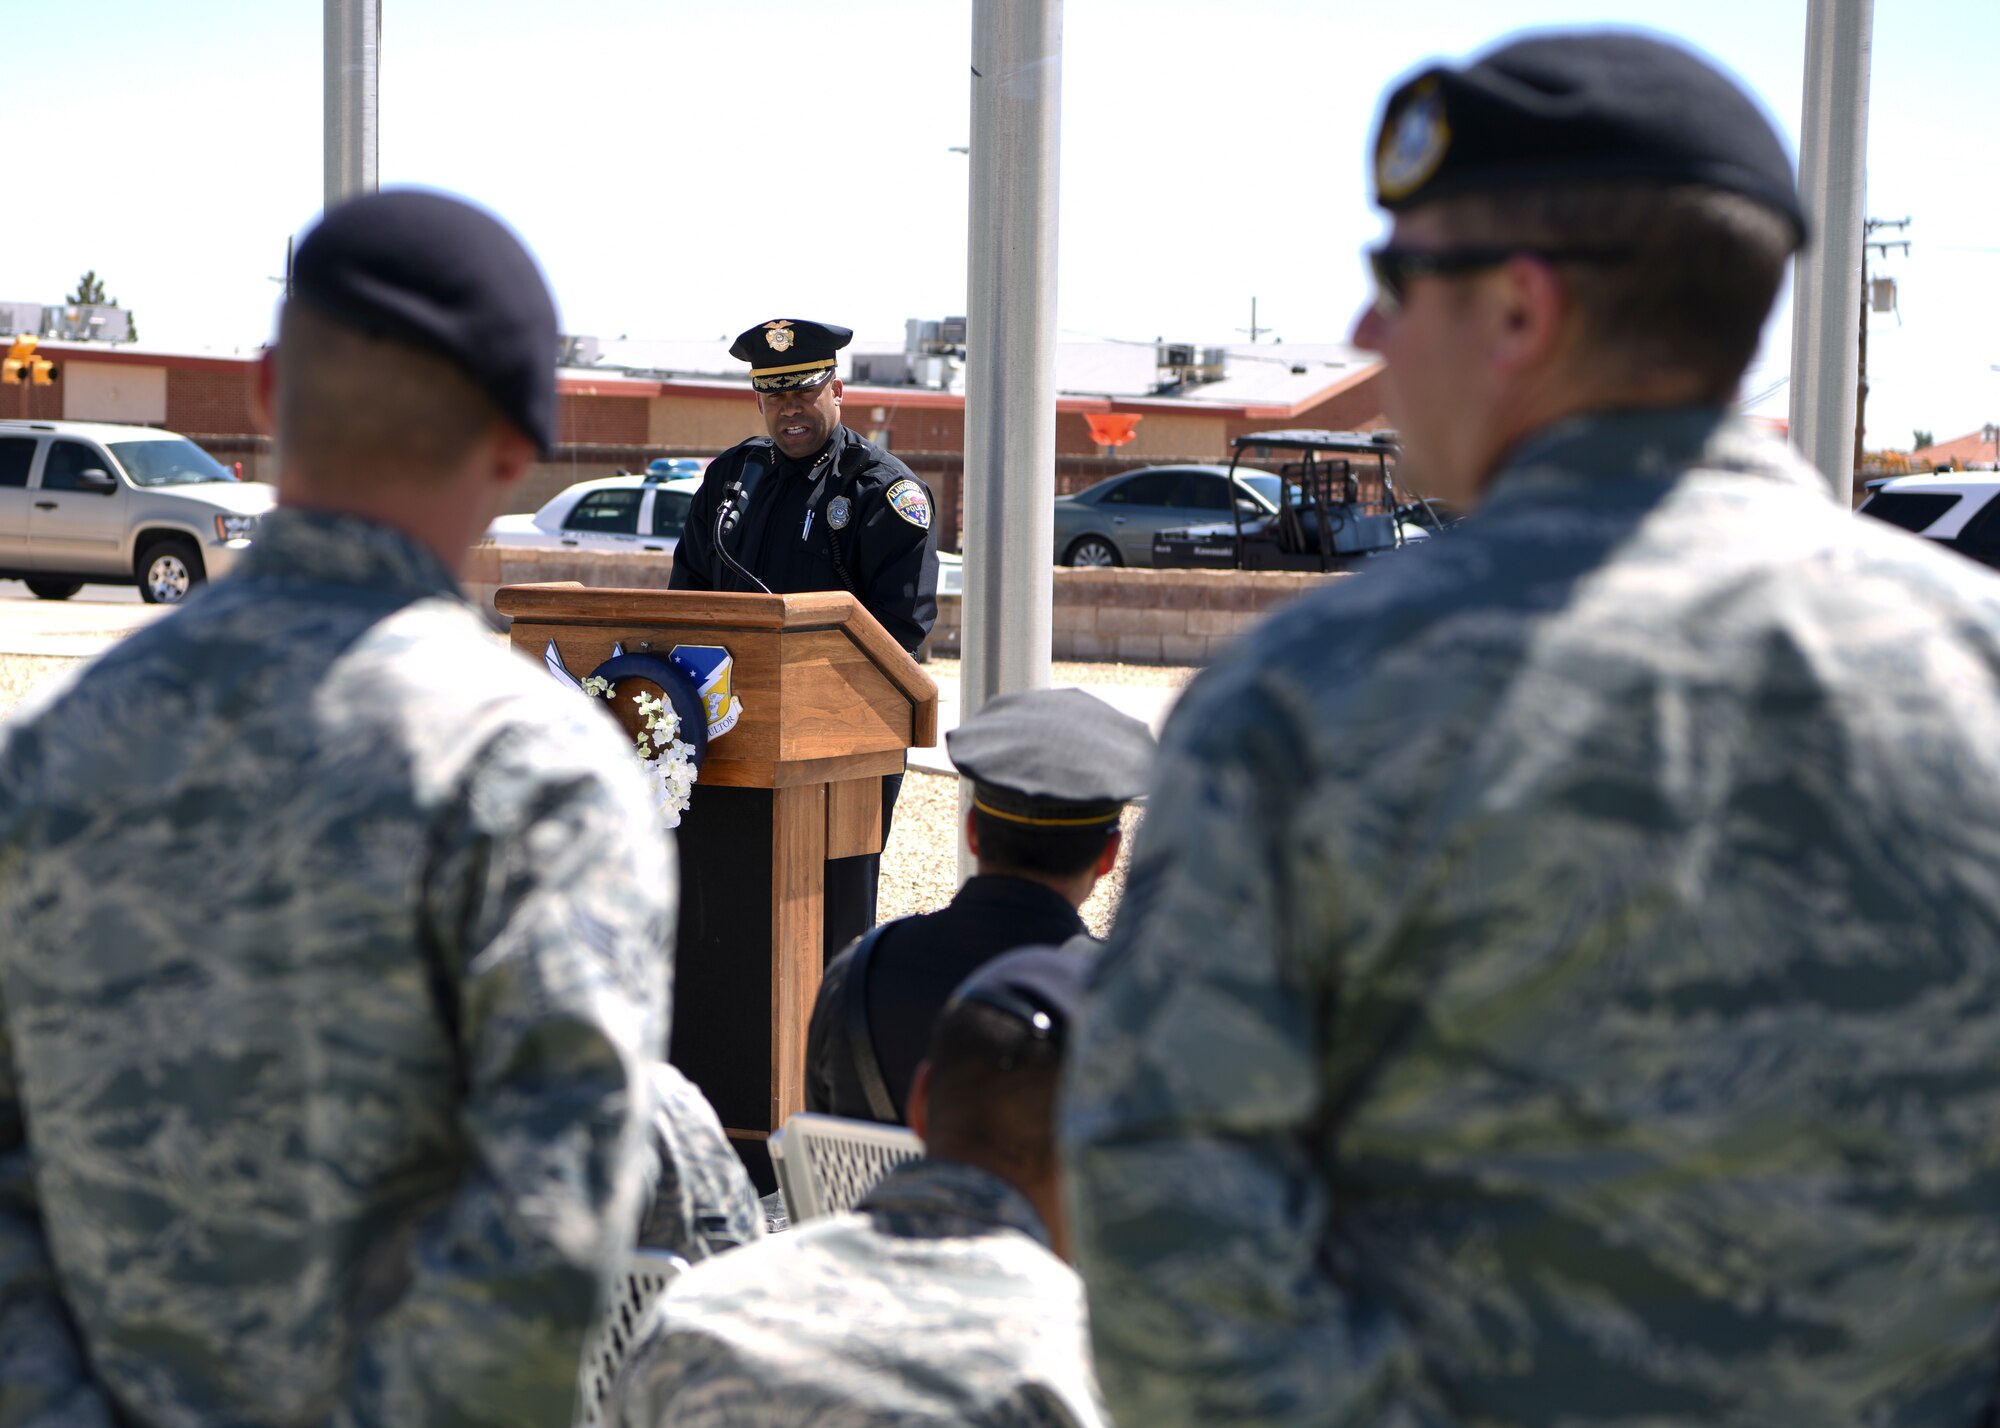 Alamogordo Chief of Police giving speech at ceremony.